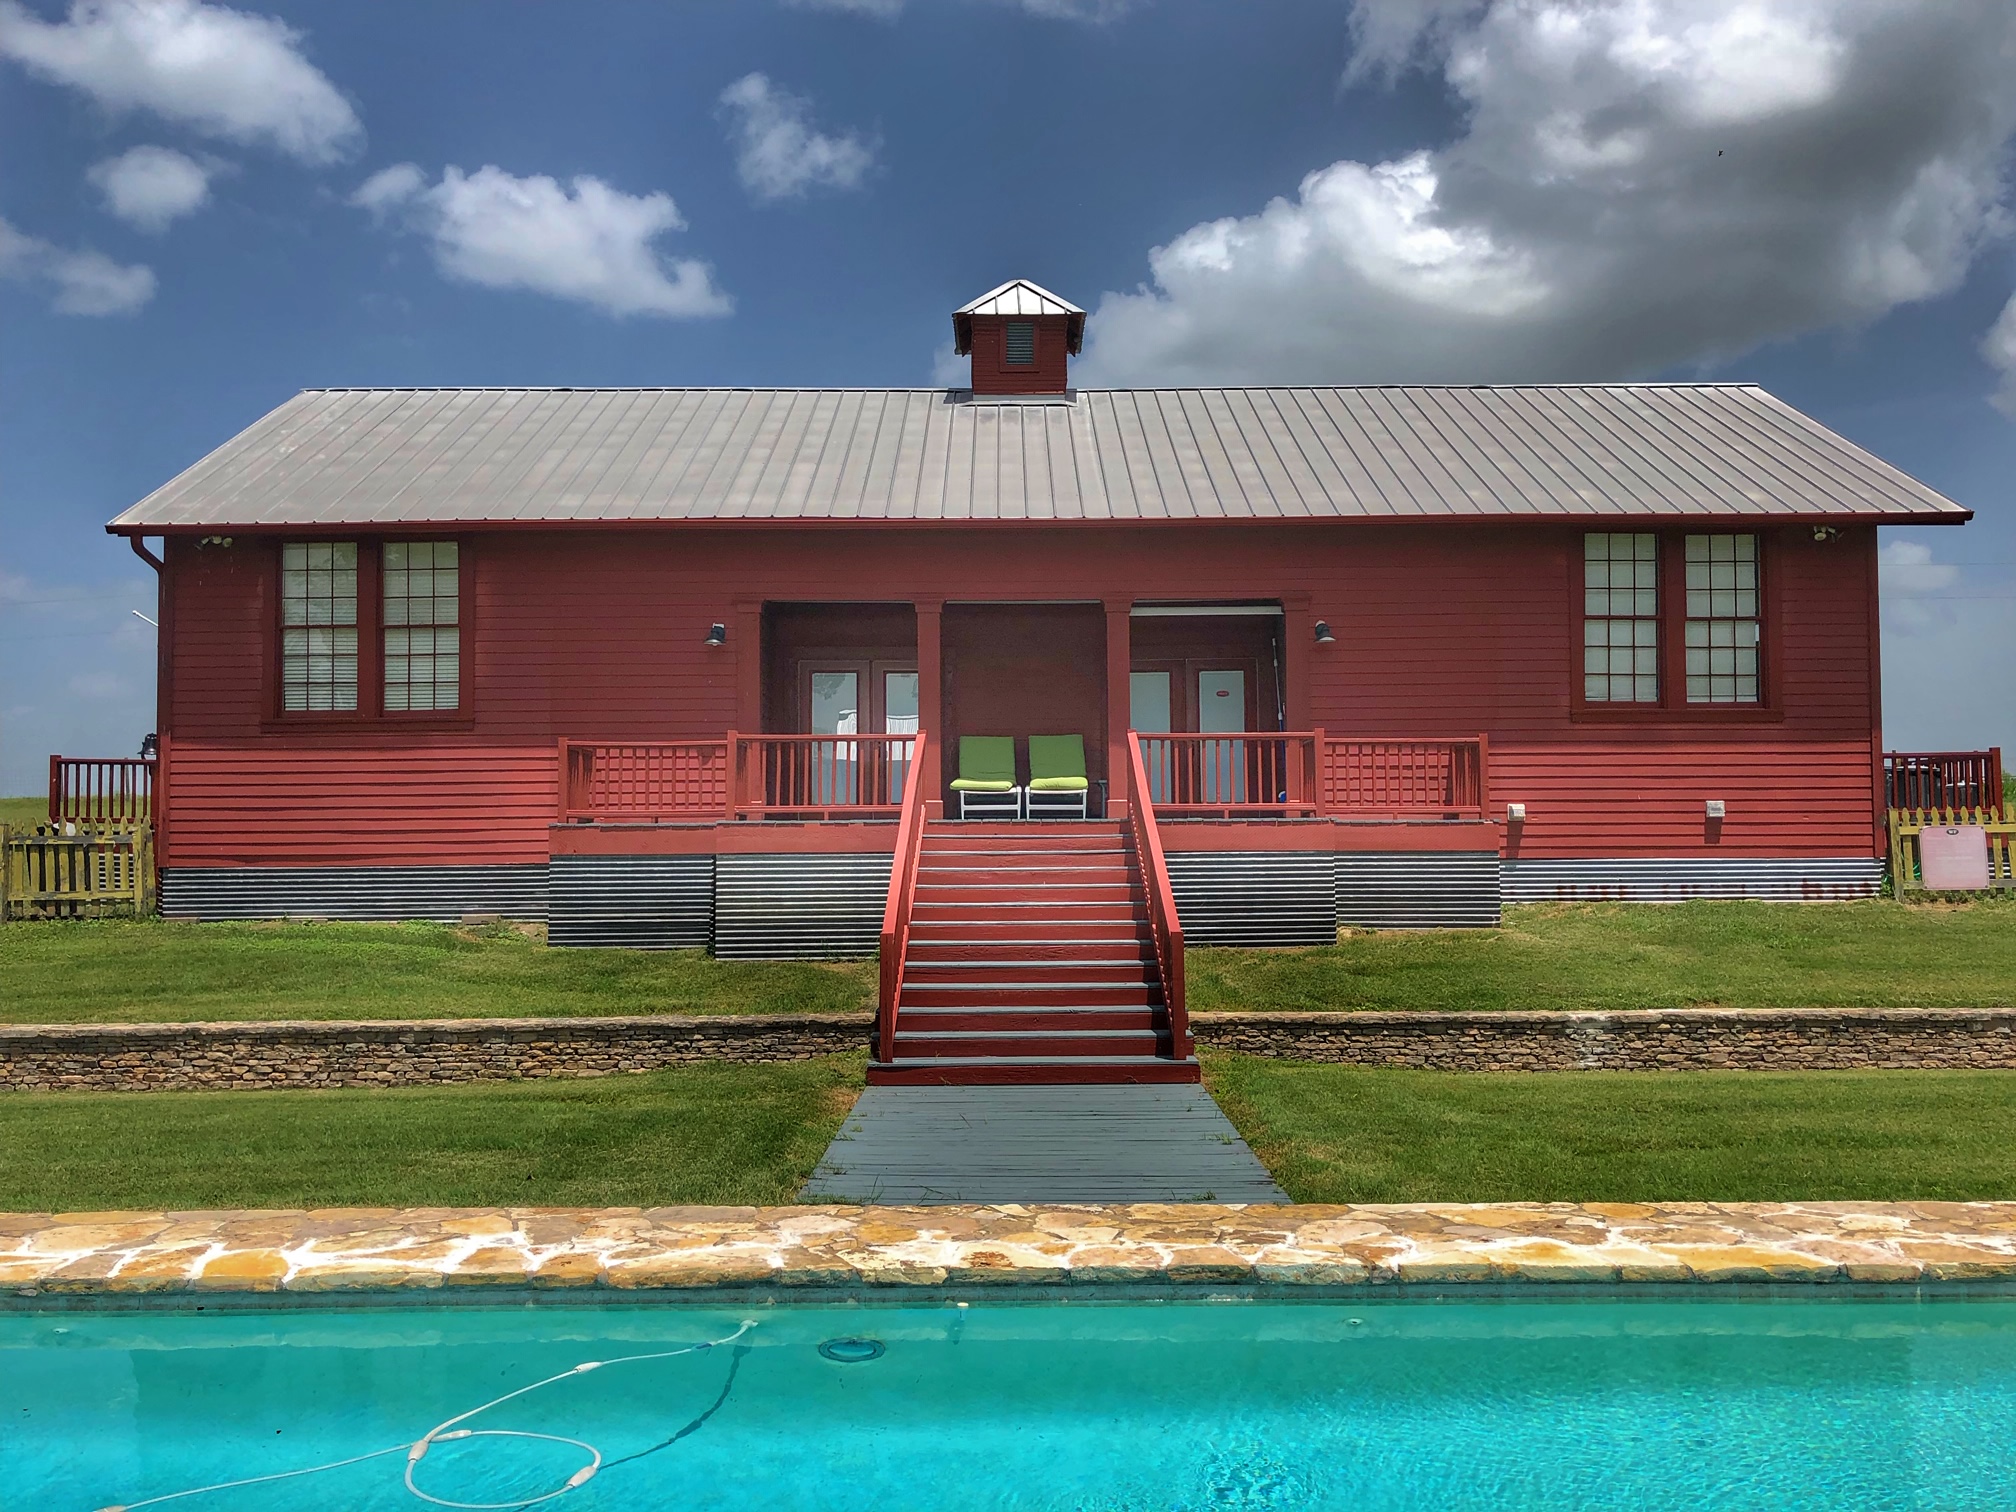 School House - Accommodations in Brenham, TX